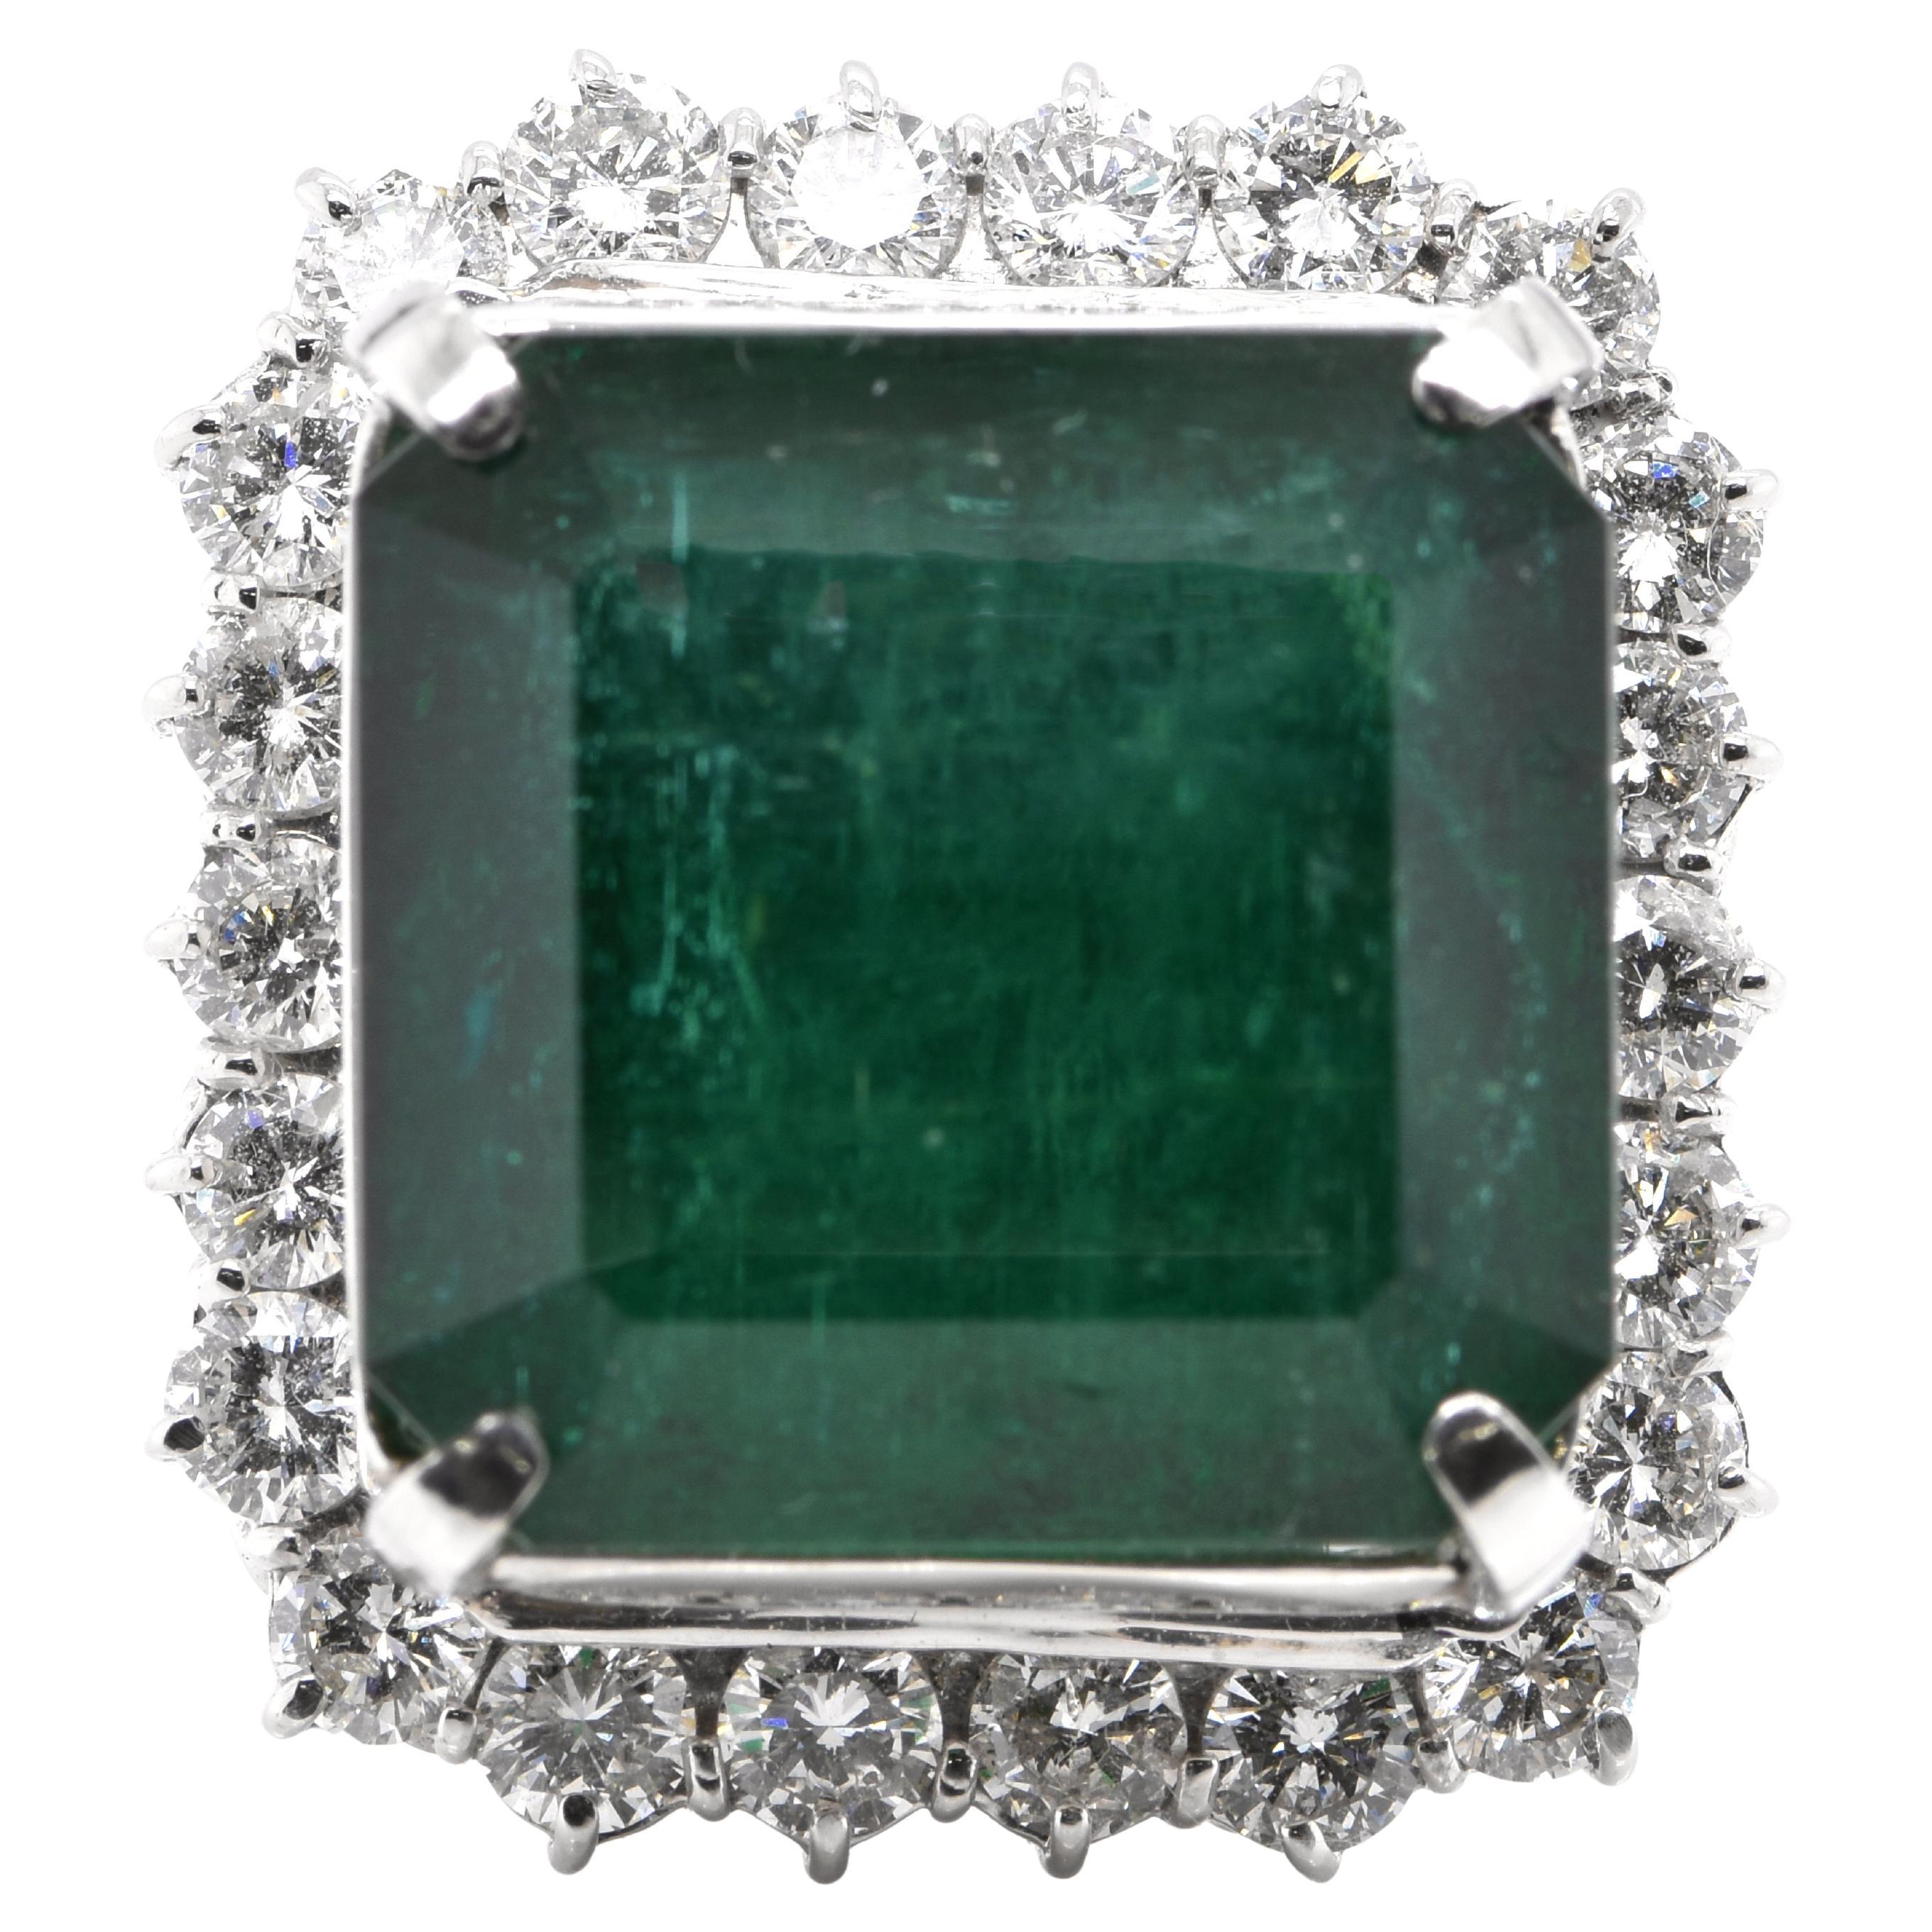 29.29 Carat Natural Emerald and Diamond Cocktail Ring Set in Platinum